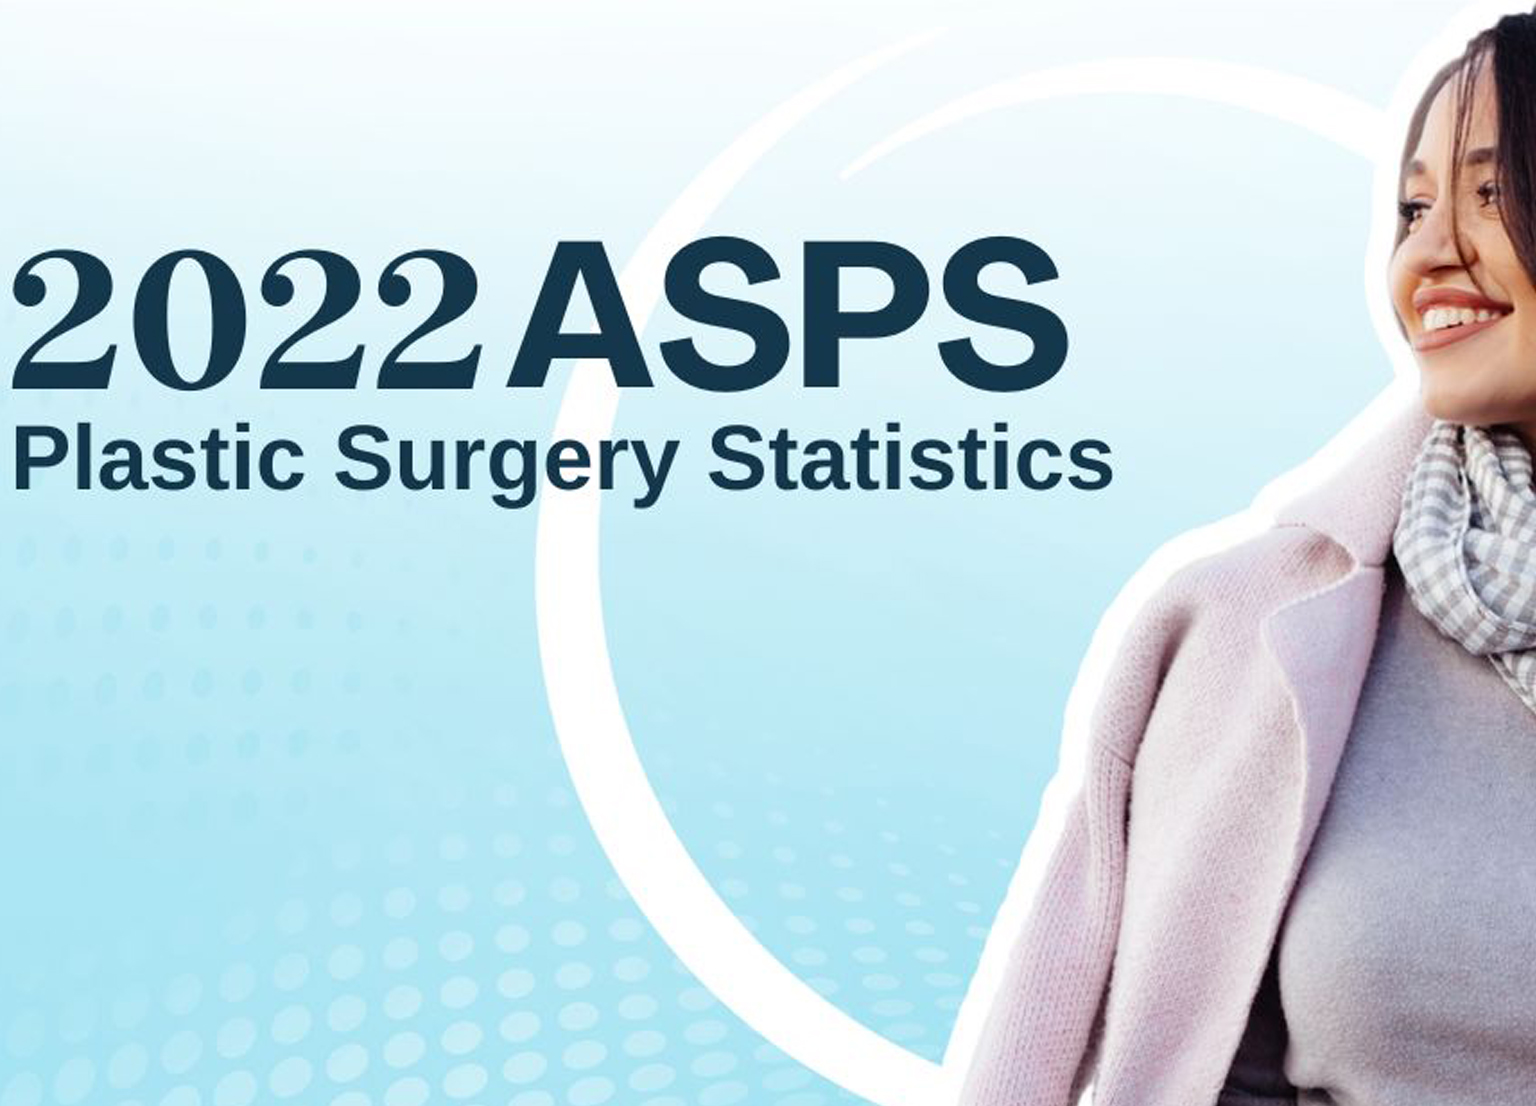 ASPS: U.S. plastic surgery volume statistics in 20...